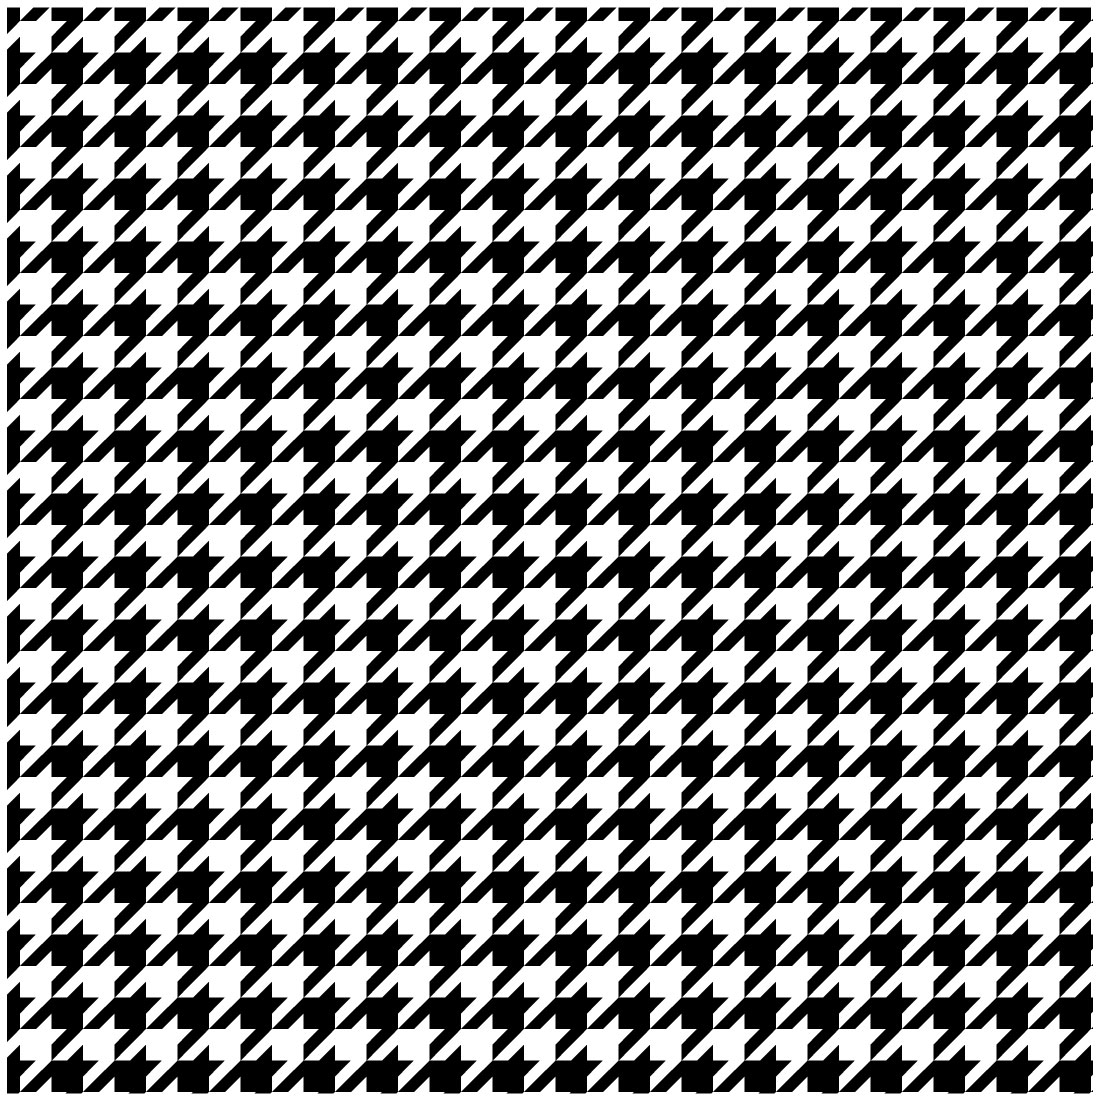 plaid patterns 23 916